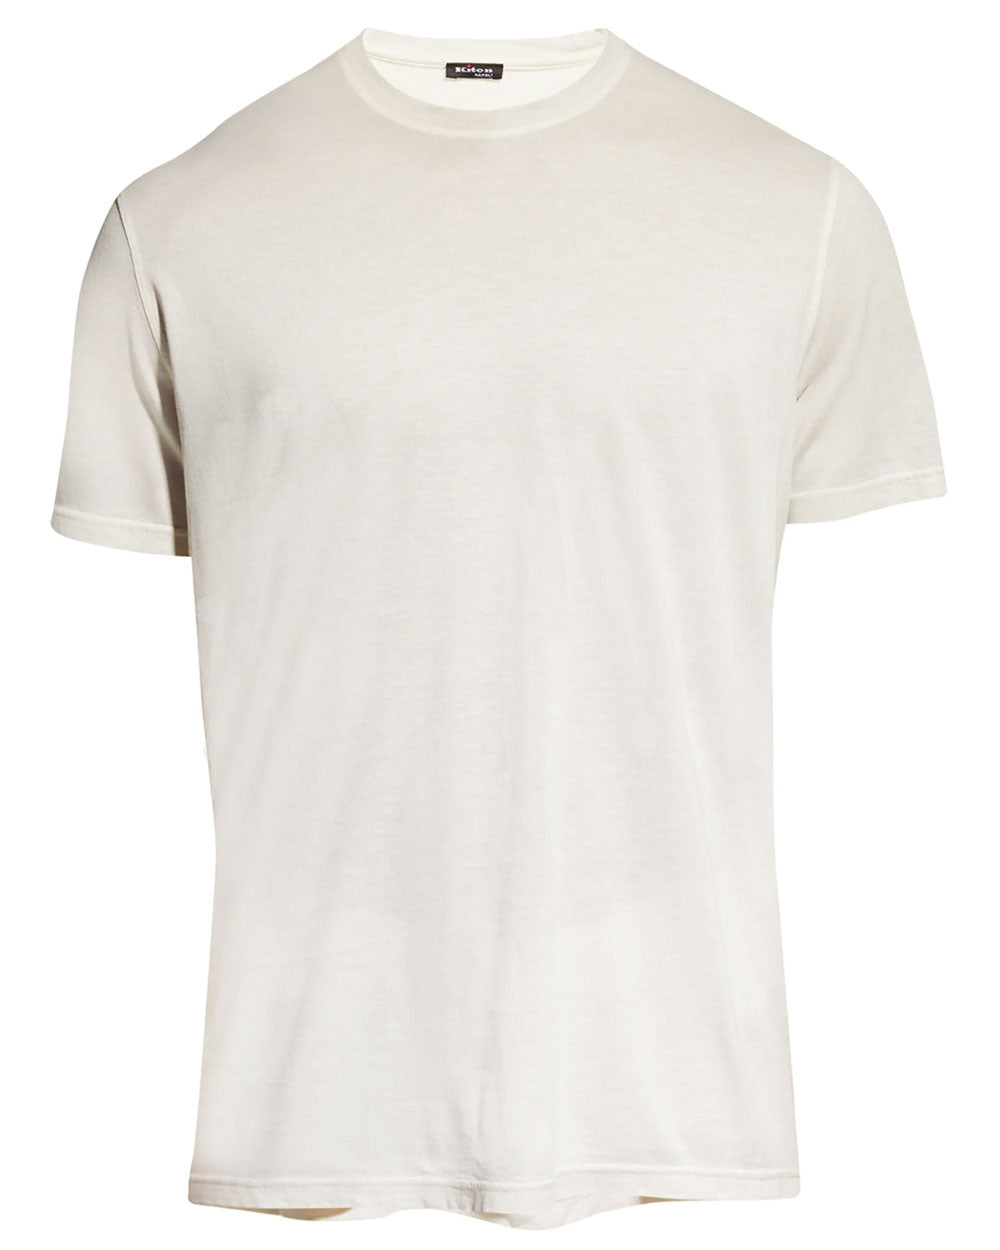 Winter White T-Shirt